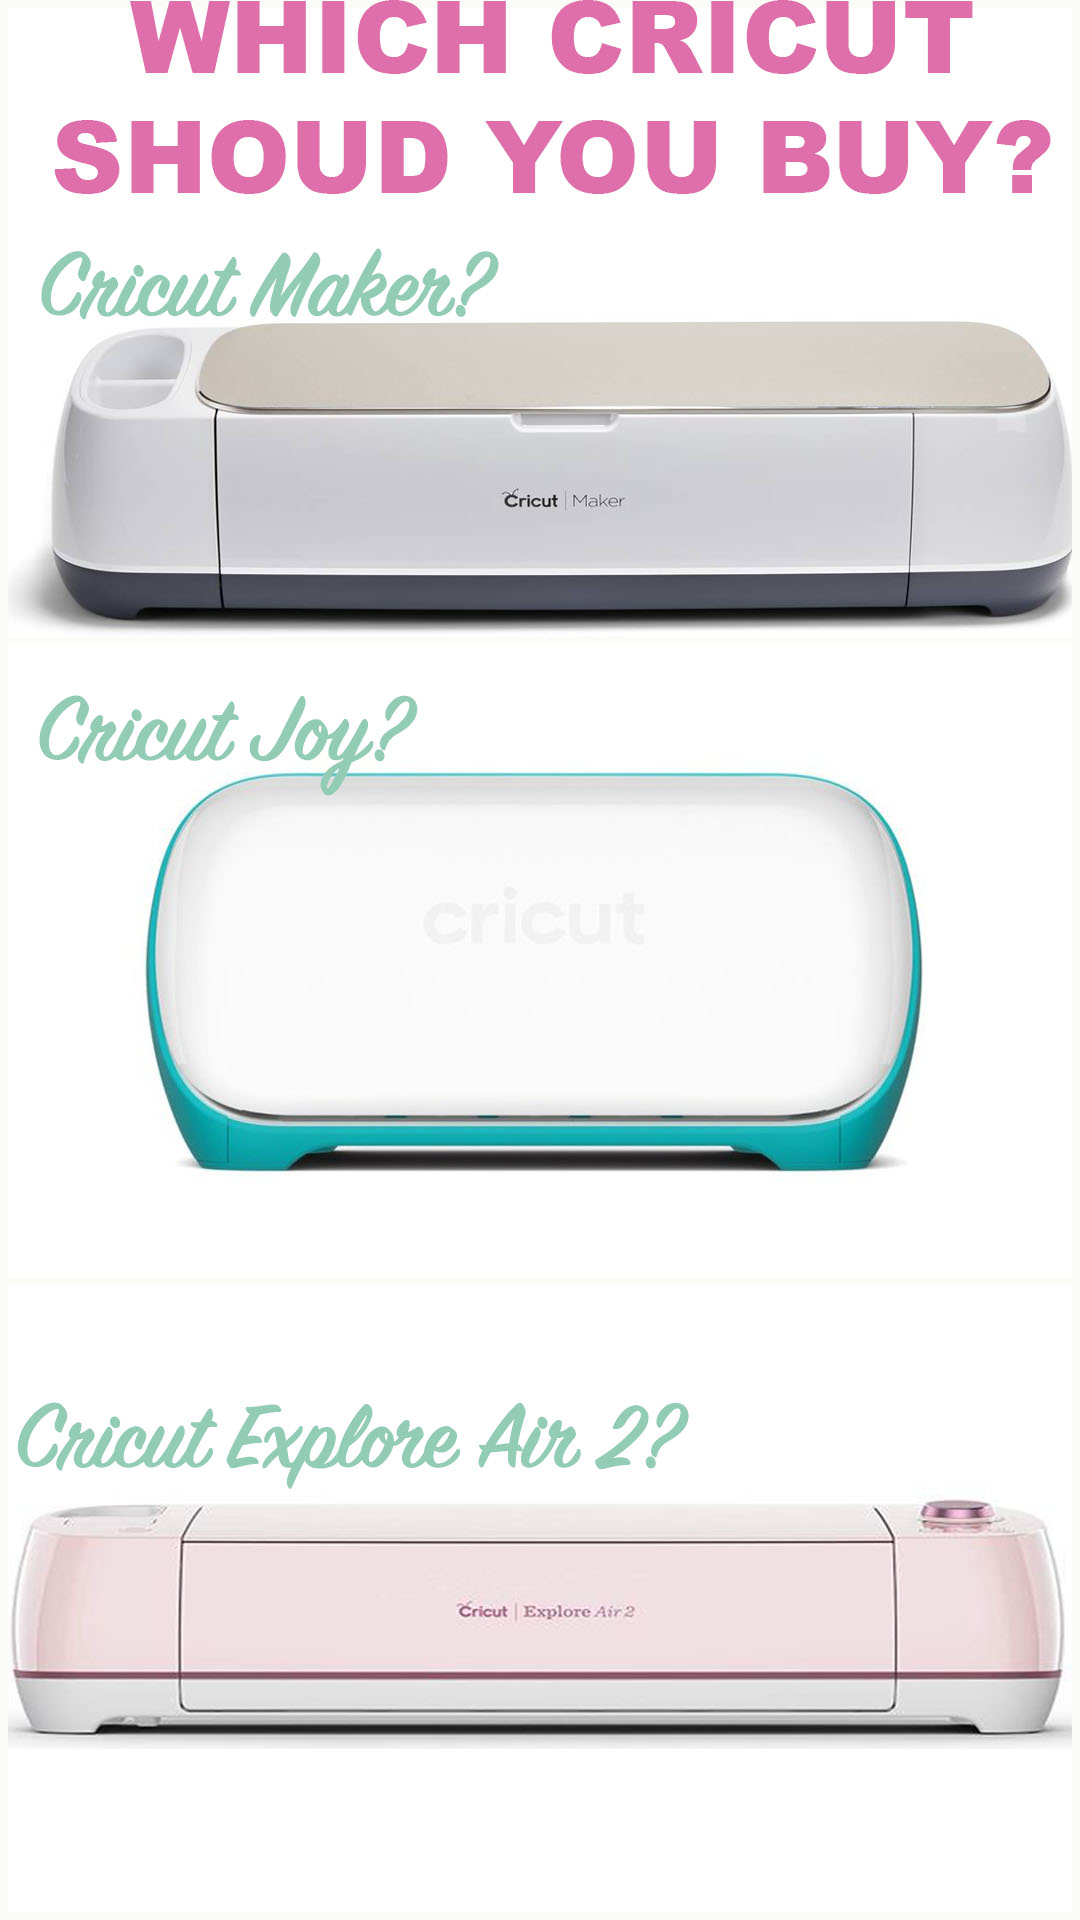 Cricut Maker vs. Cricut Explore Air 2: Which is best for you?